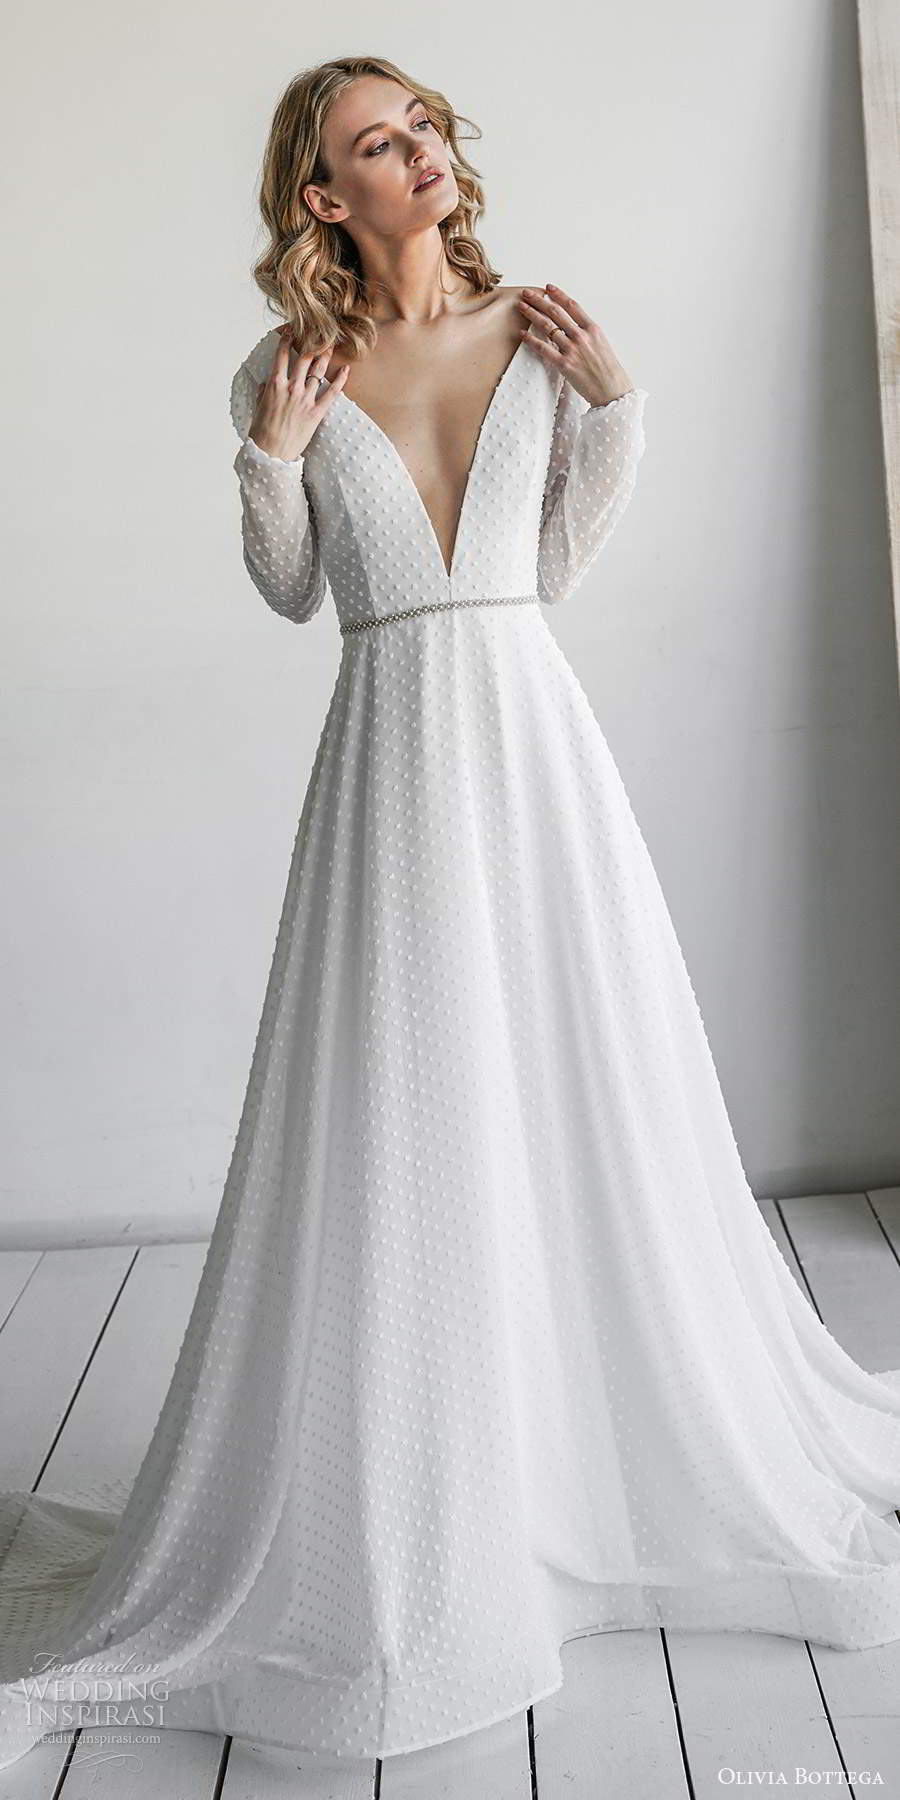 olivia bottega 2021 bridal long sleeves plunging v neckline fully embellished a line ball gown wedding dress chapel train (13) mv